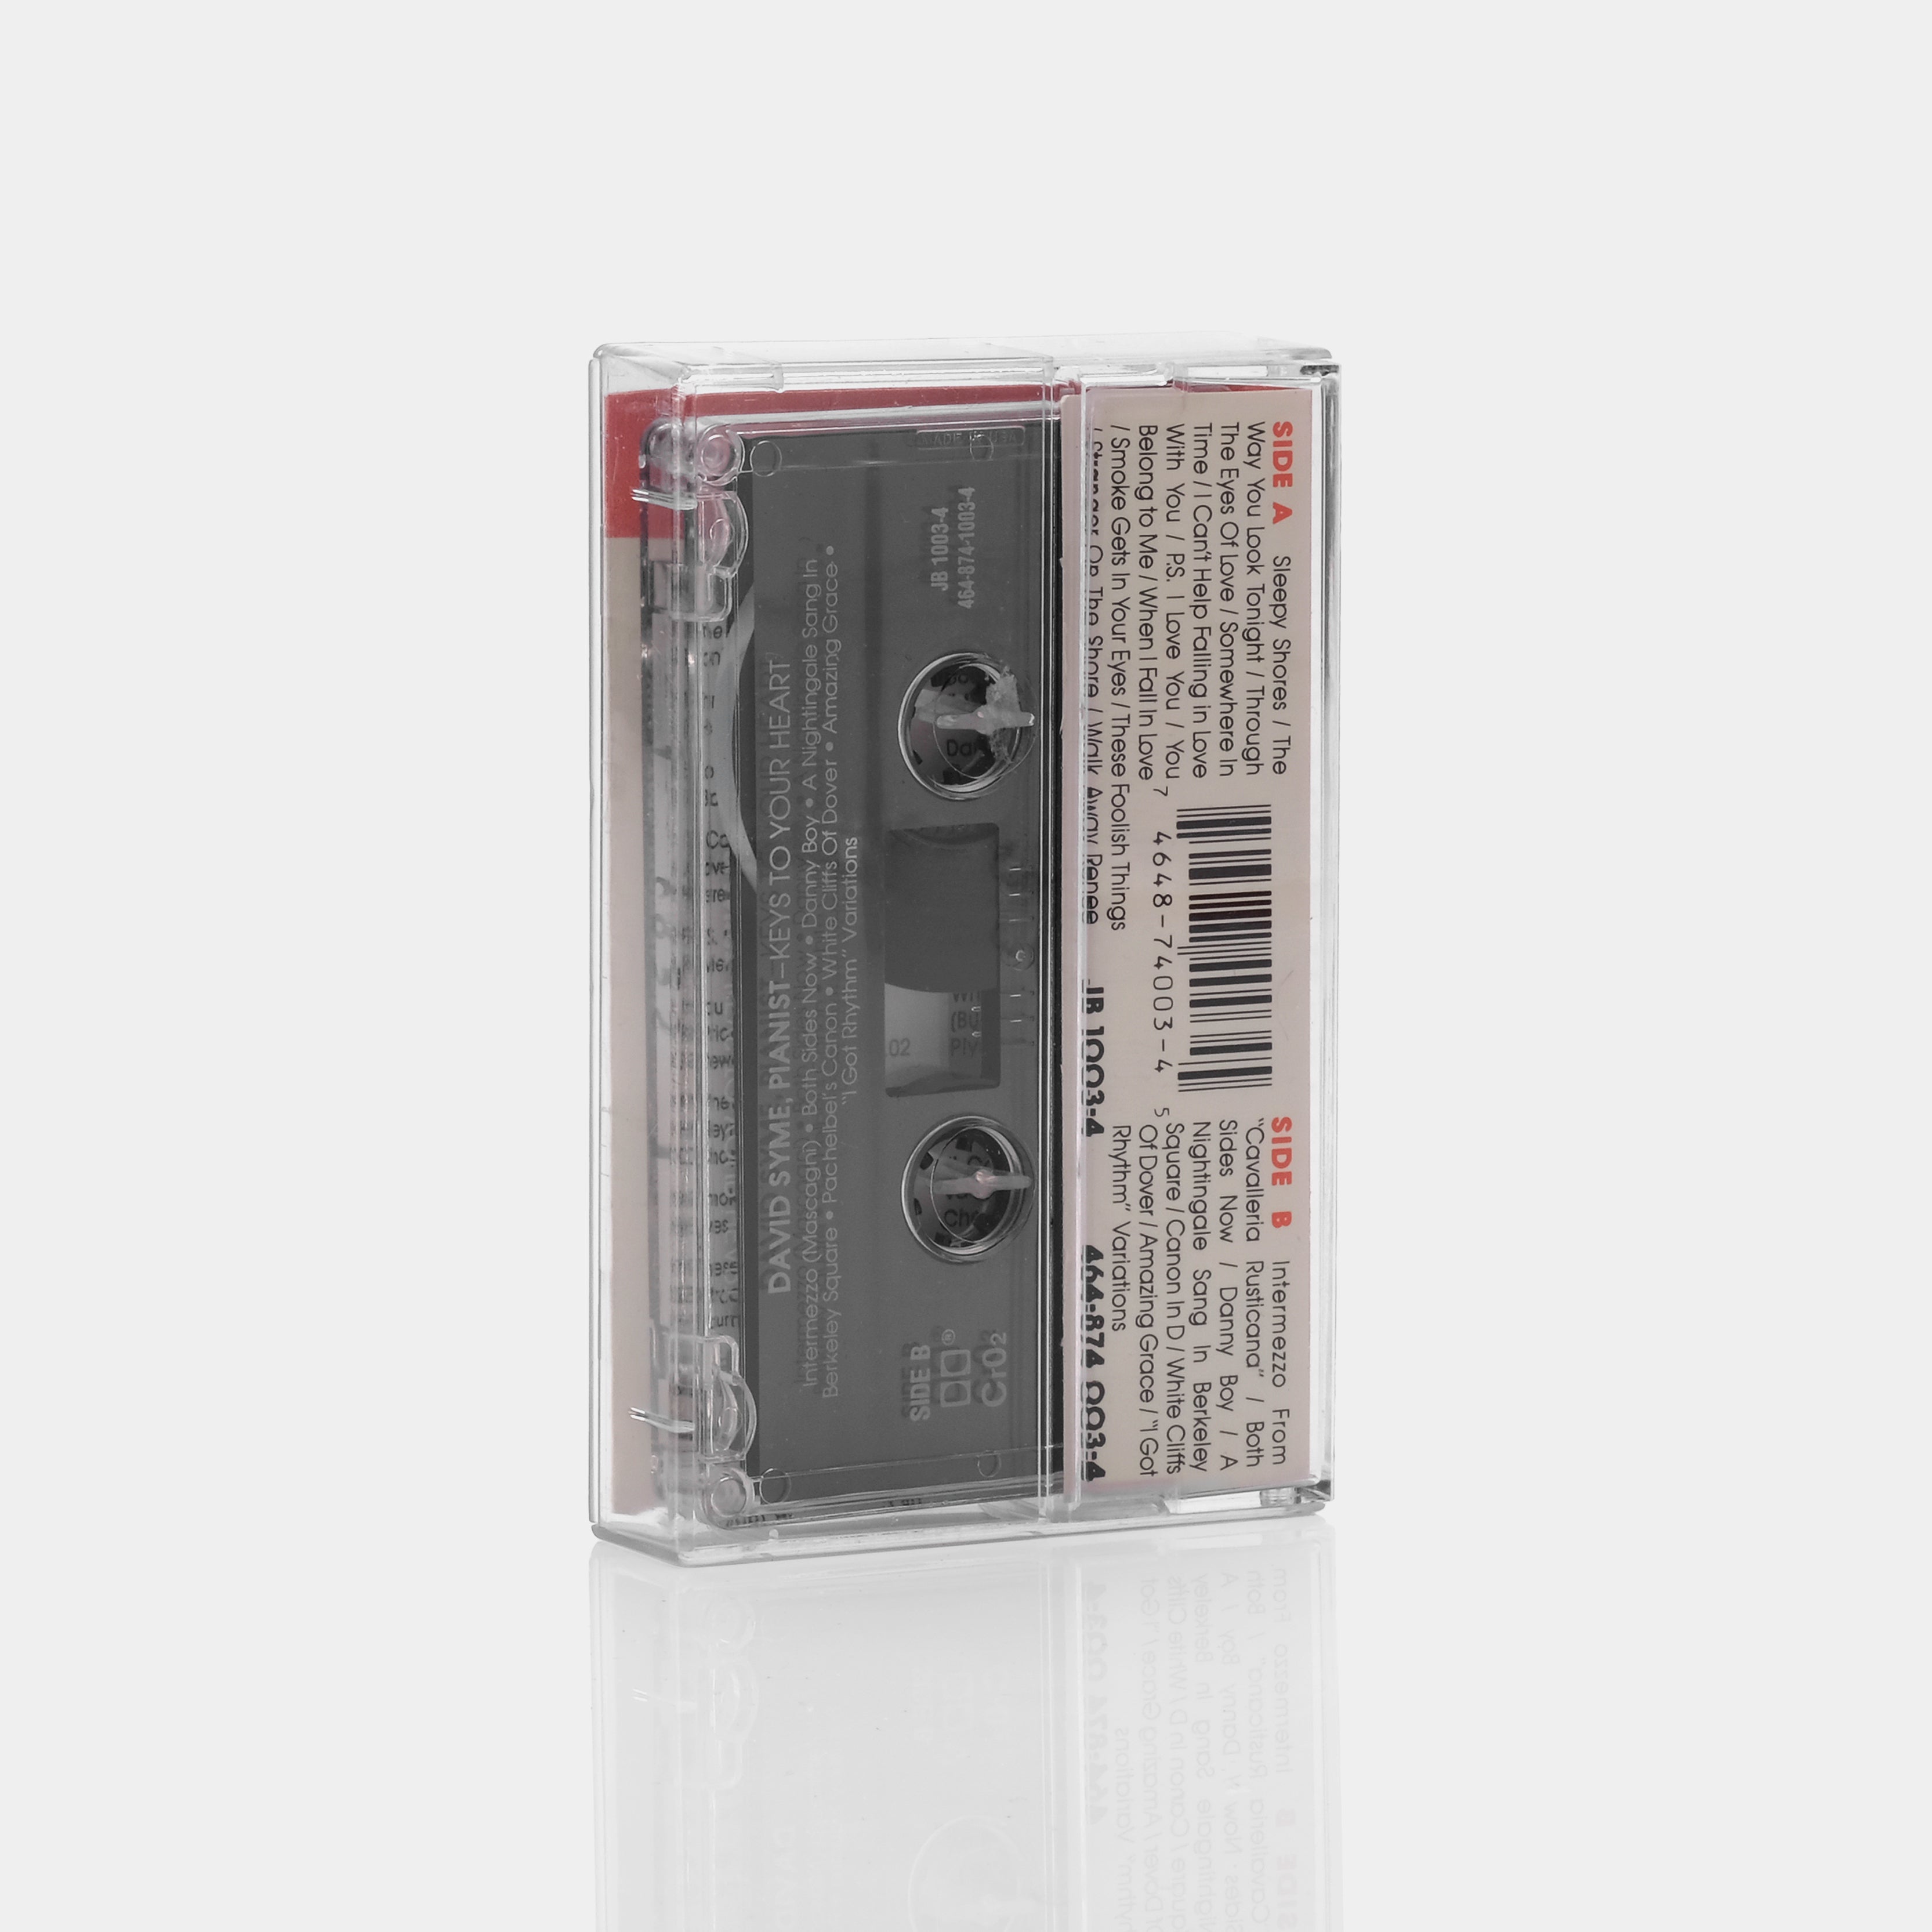 David Syme - Keys To Your Heart Cassette Tape